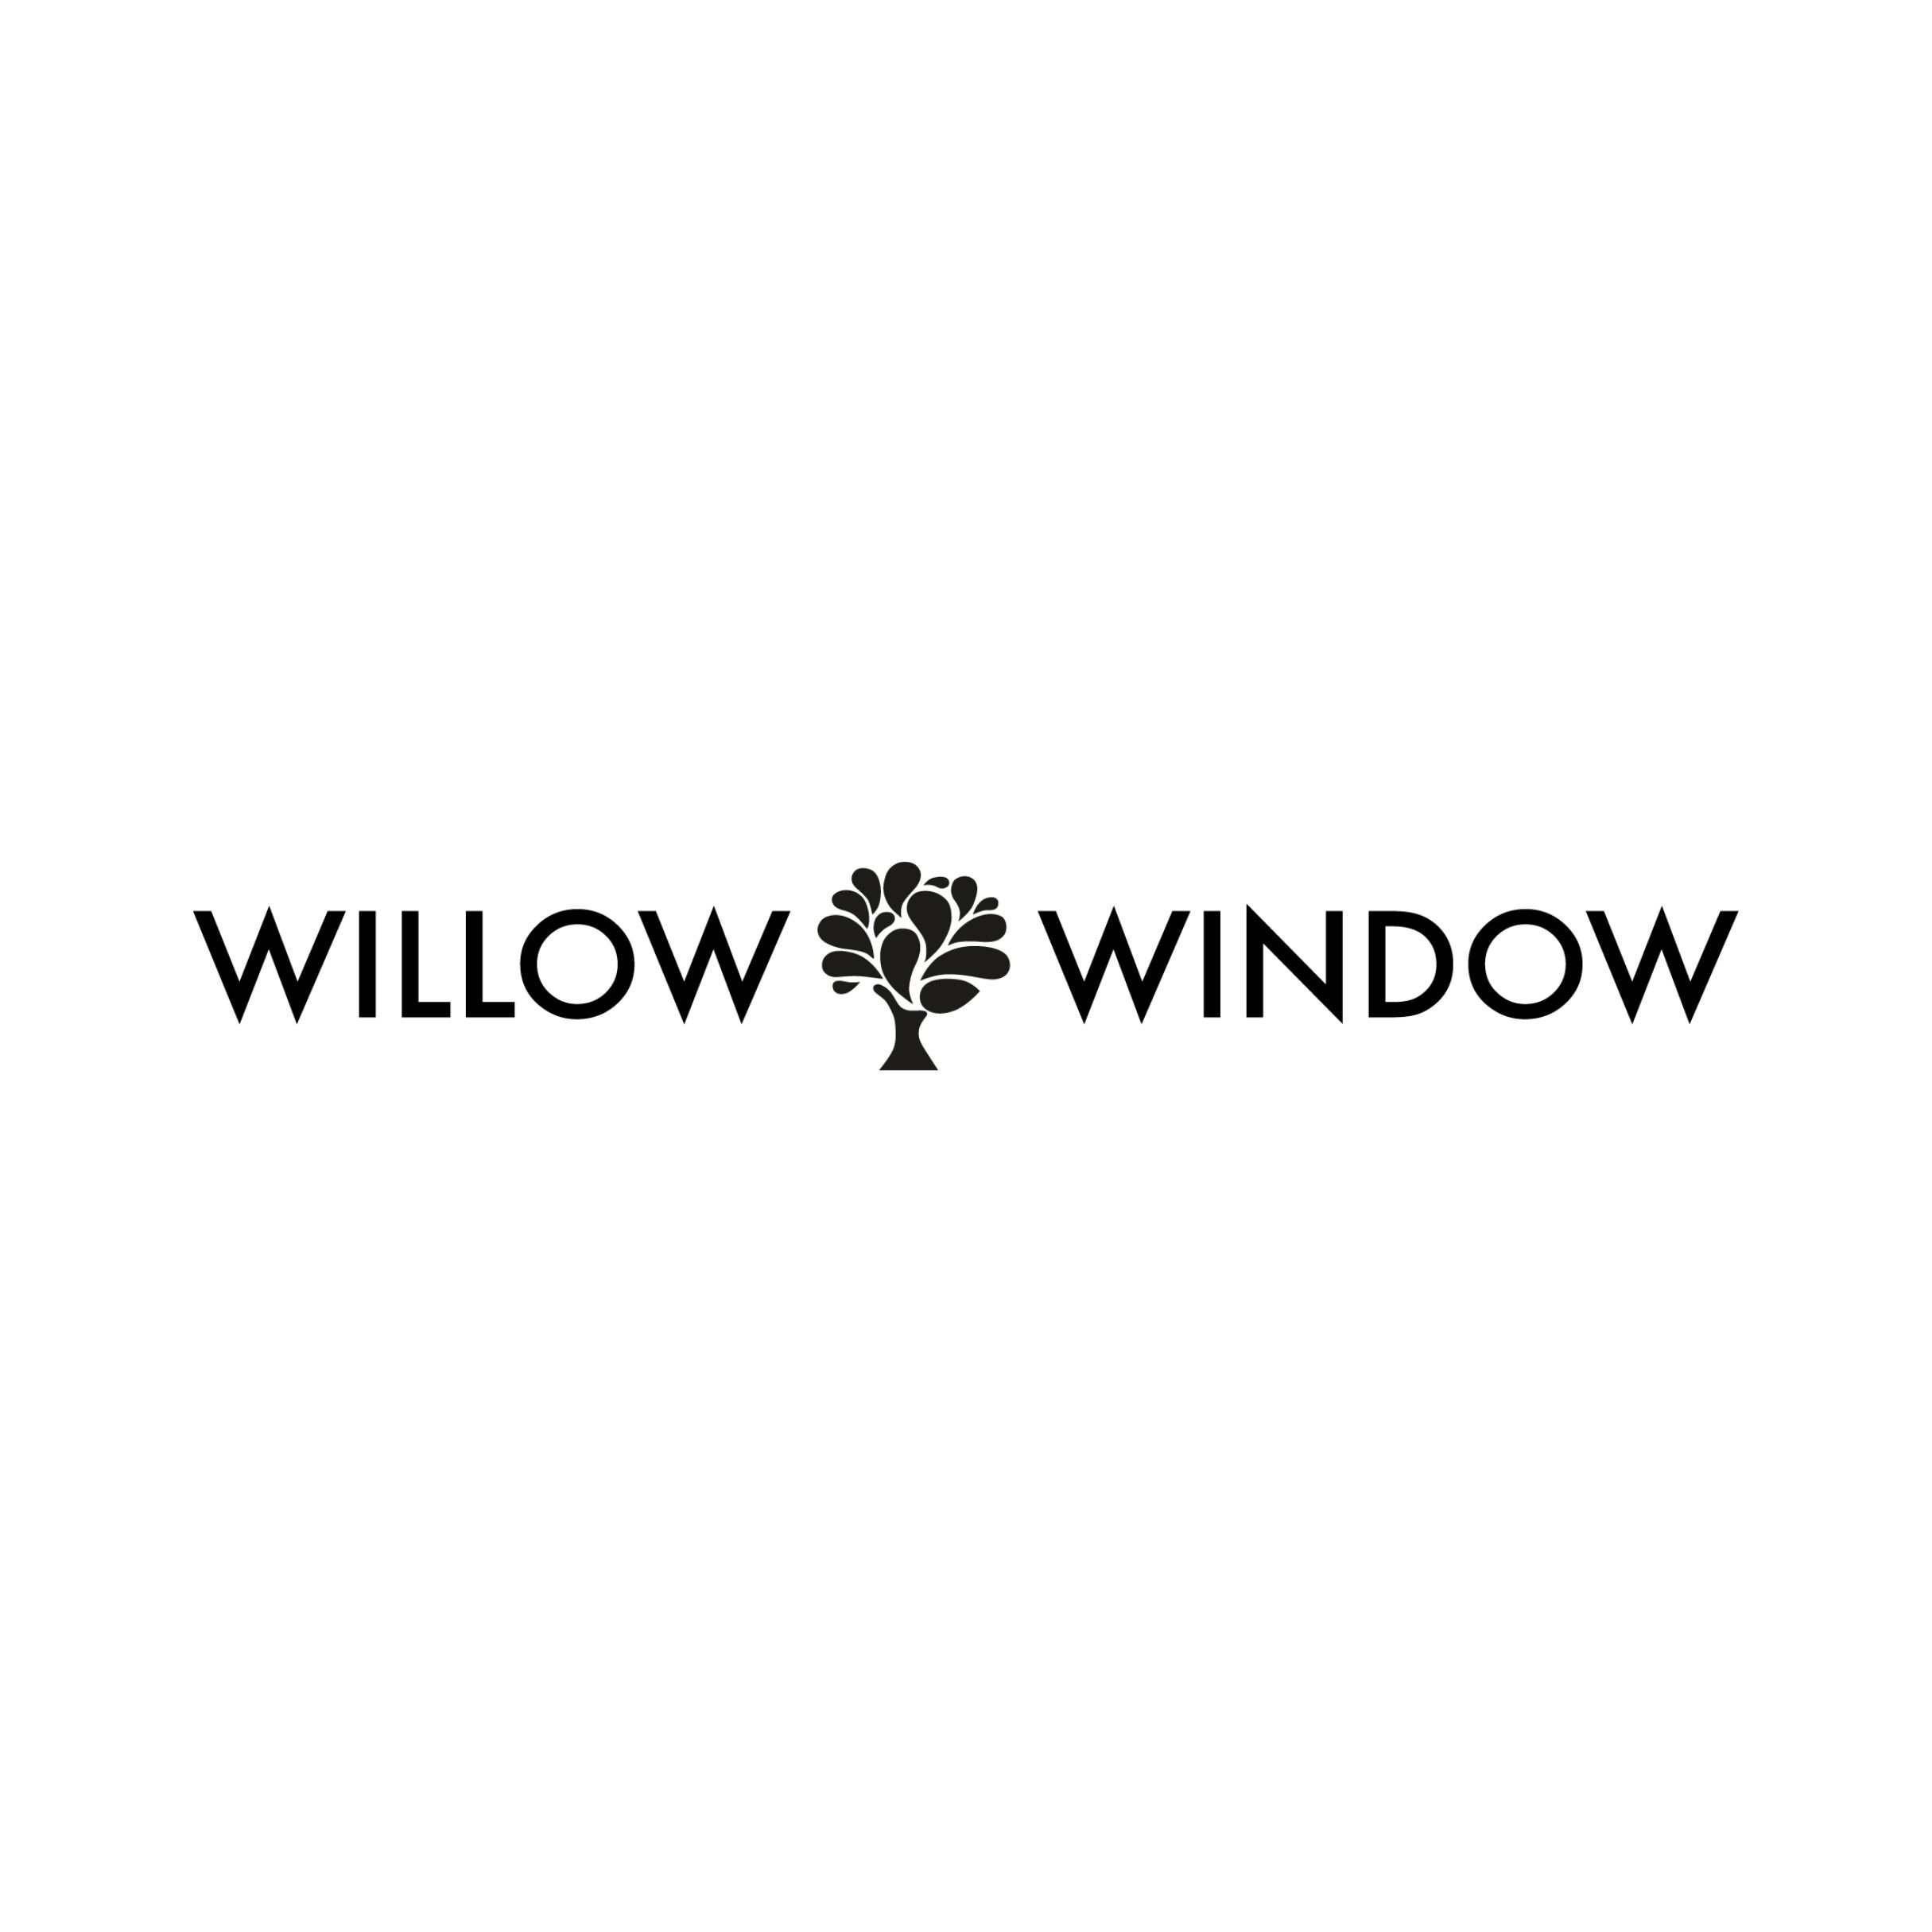 Tall-Boy-Marketing-Client-List-Willow-Window.jpg